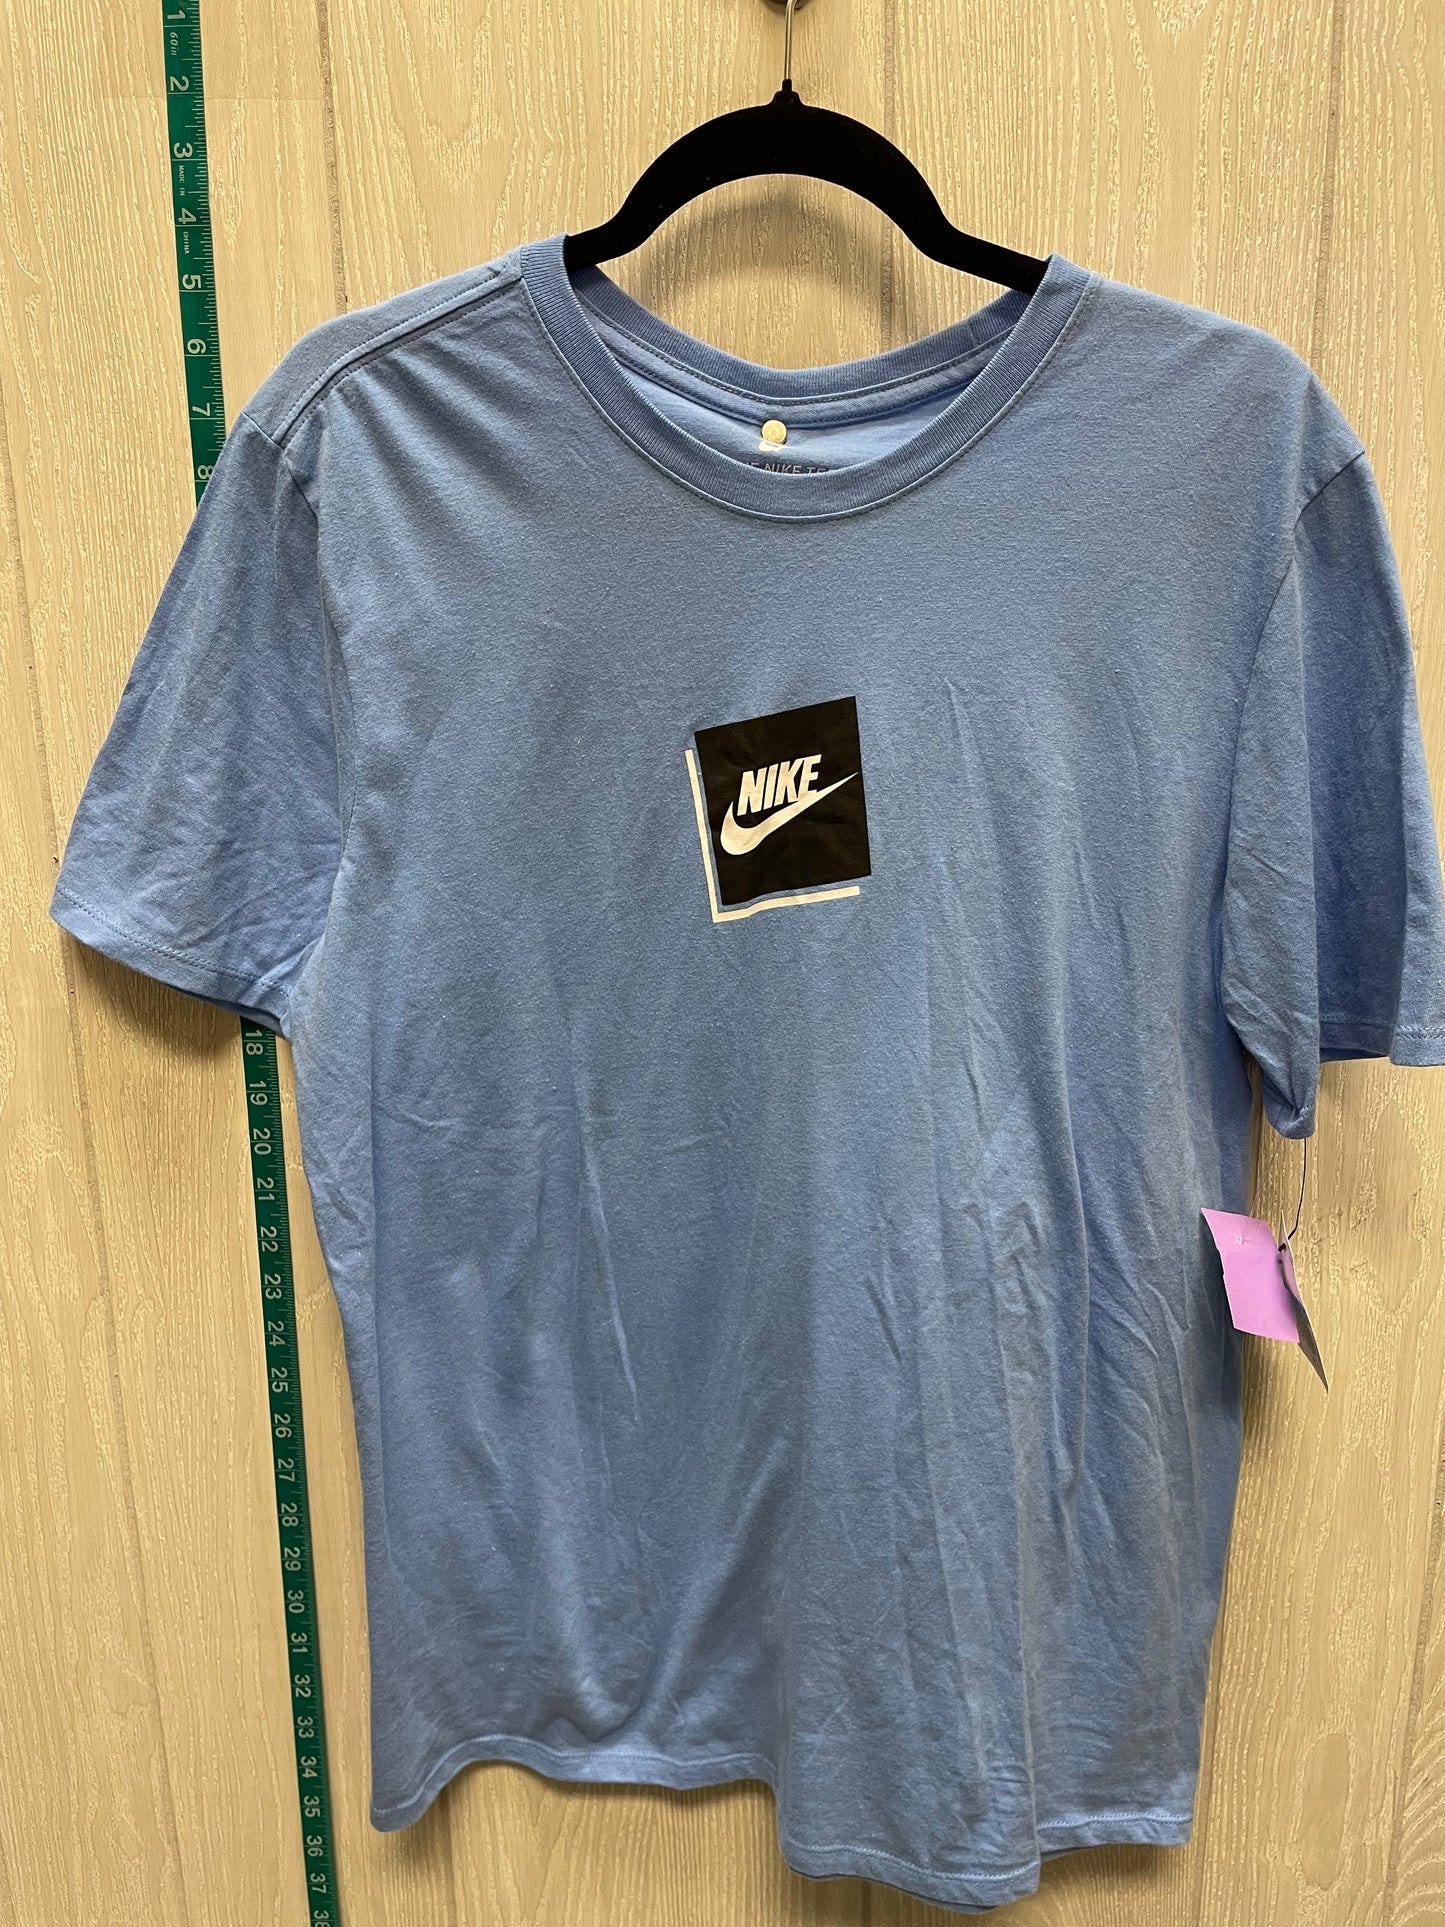 Blue & White Top Short Sleeve Basic Nike Apparel, Size M